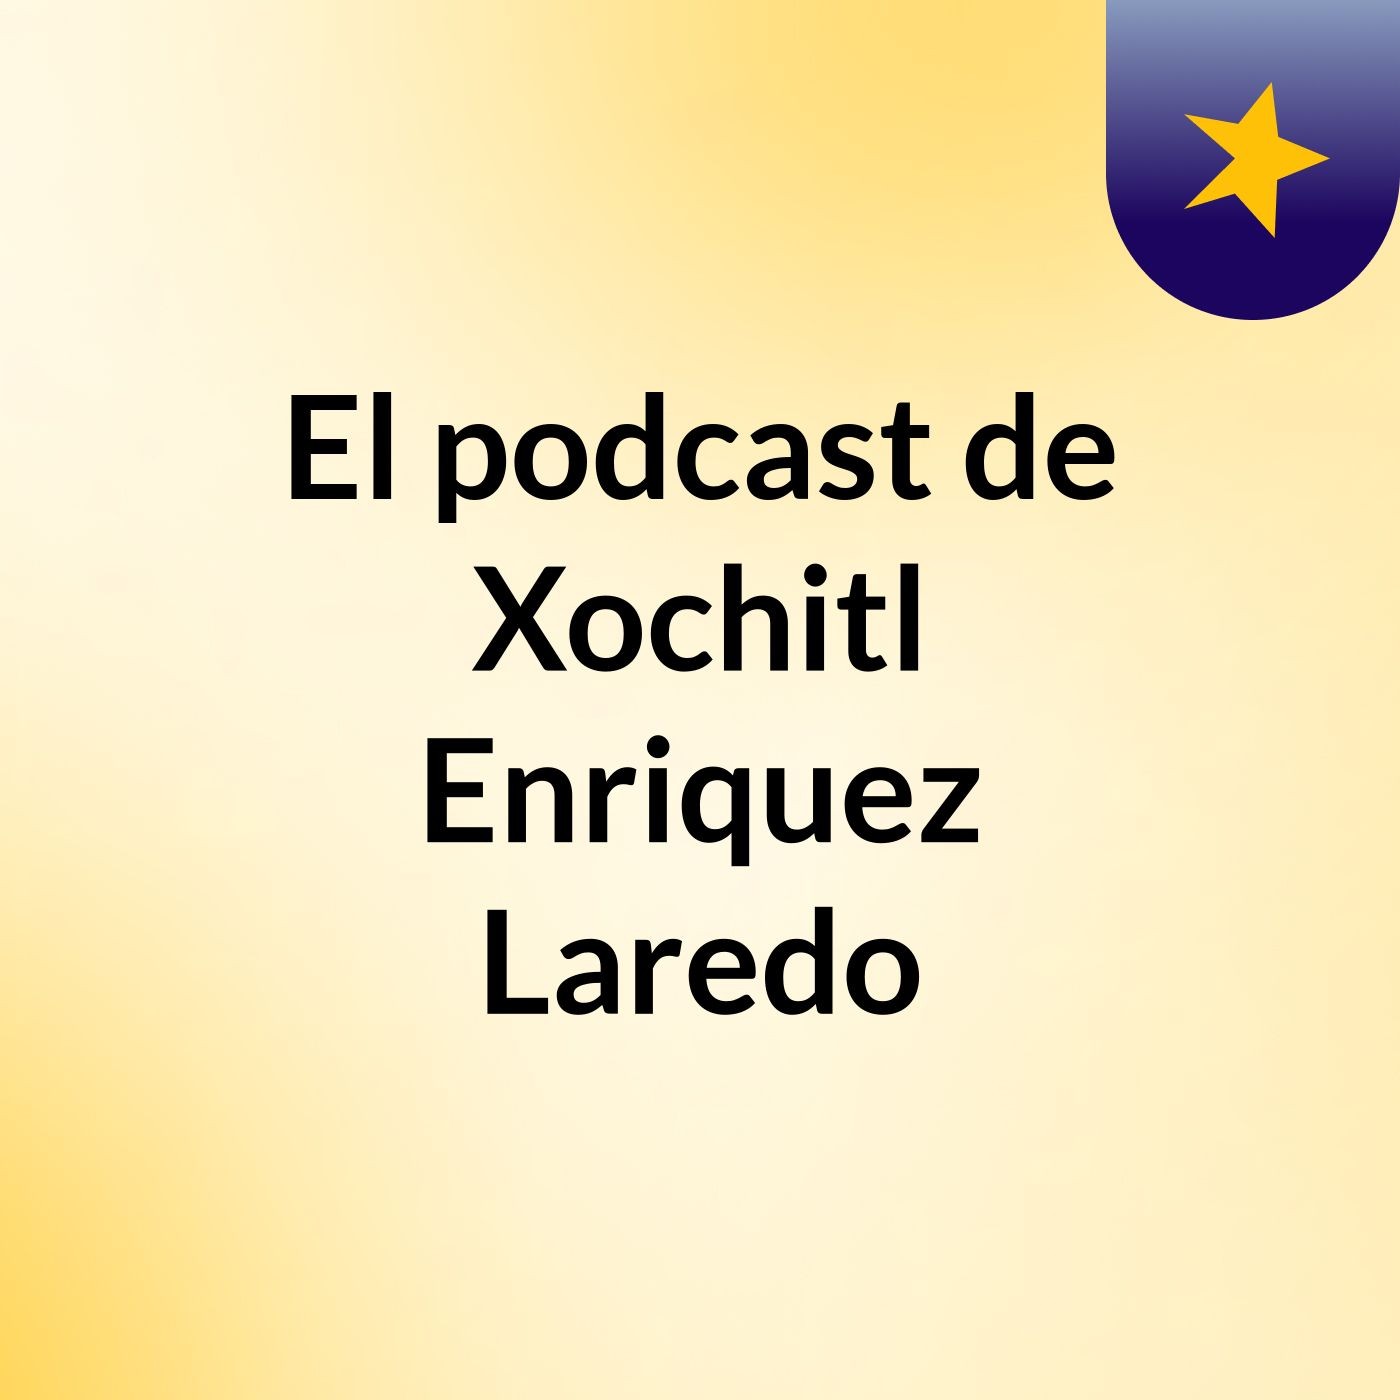 Episodio 2 - El podcast de Xochitl Enriquez Laredo